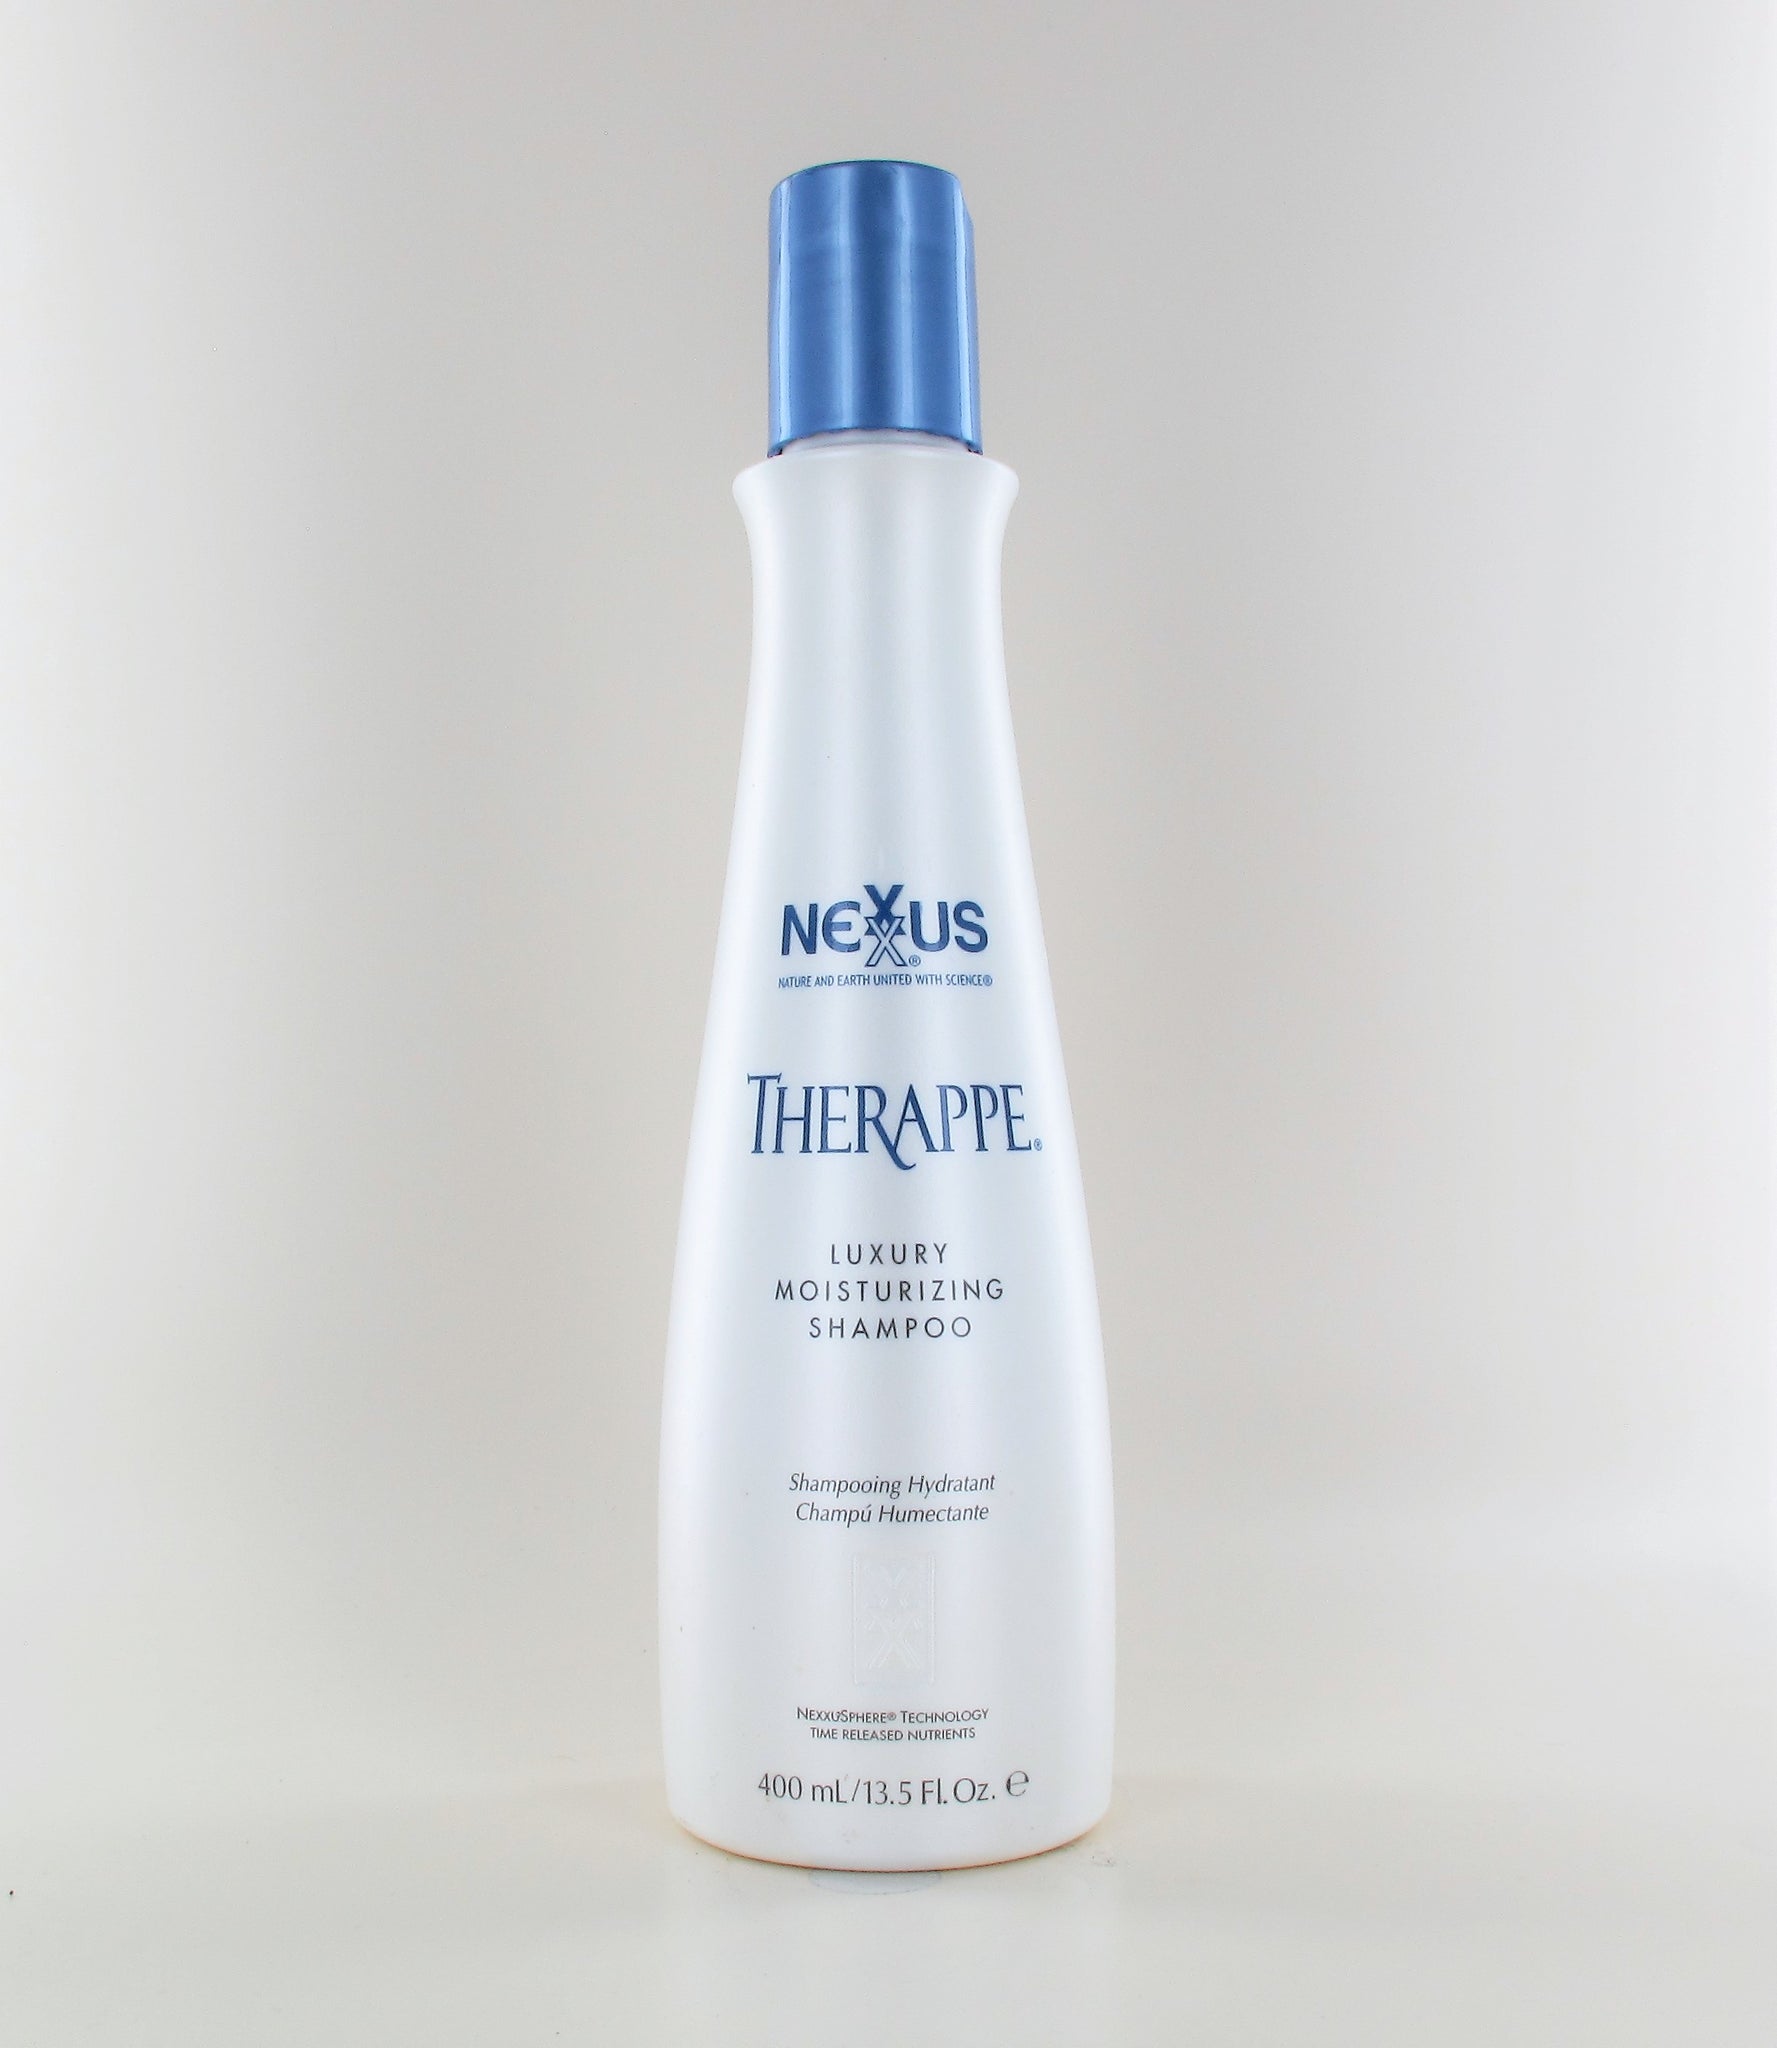 NEXXUS Therappe Luxury Moisturizing Shampoo 13.5 oz